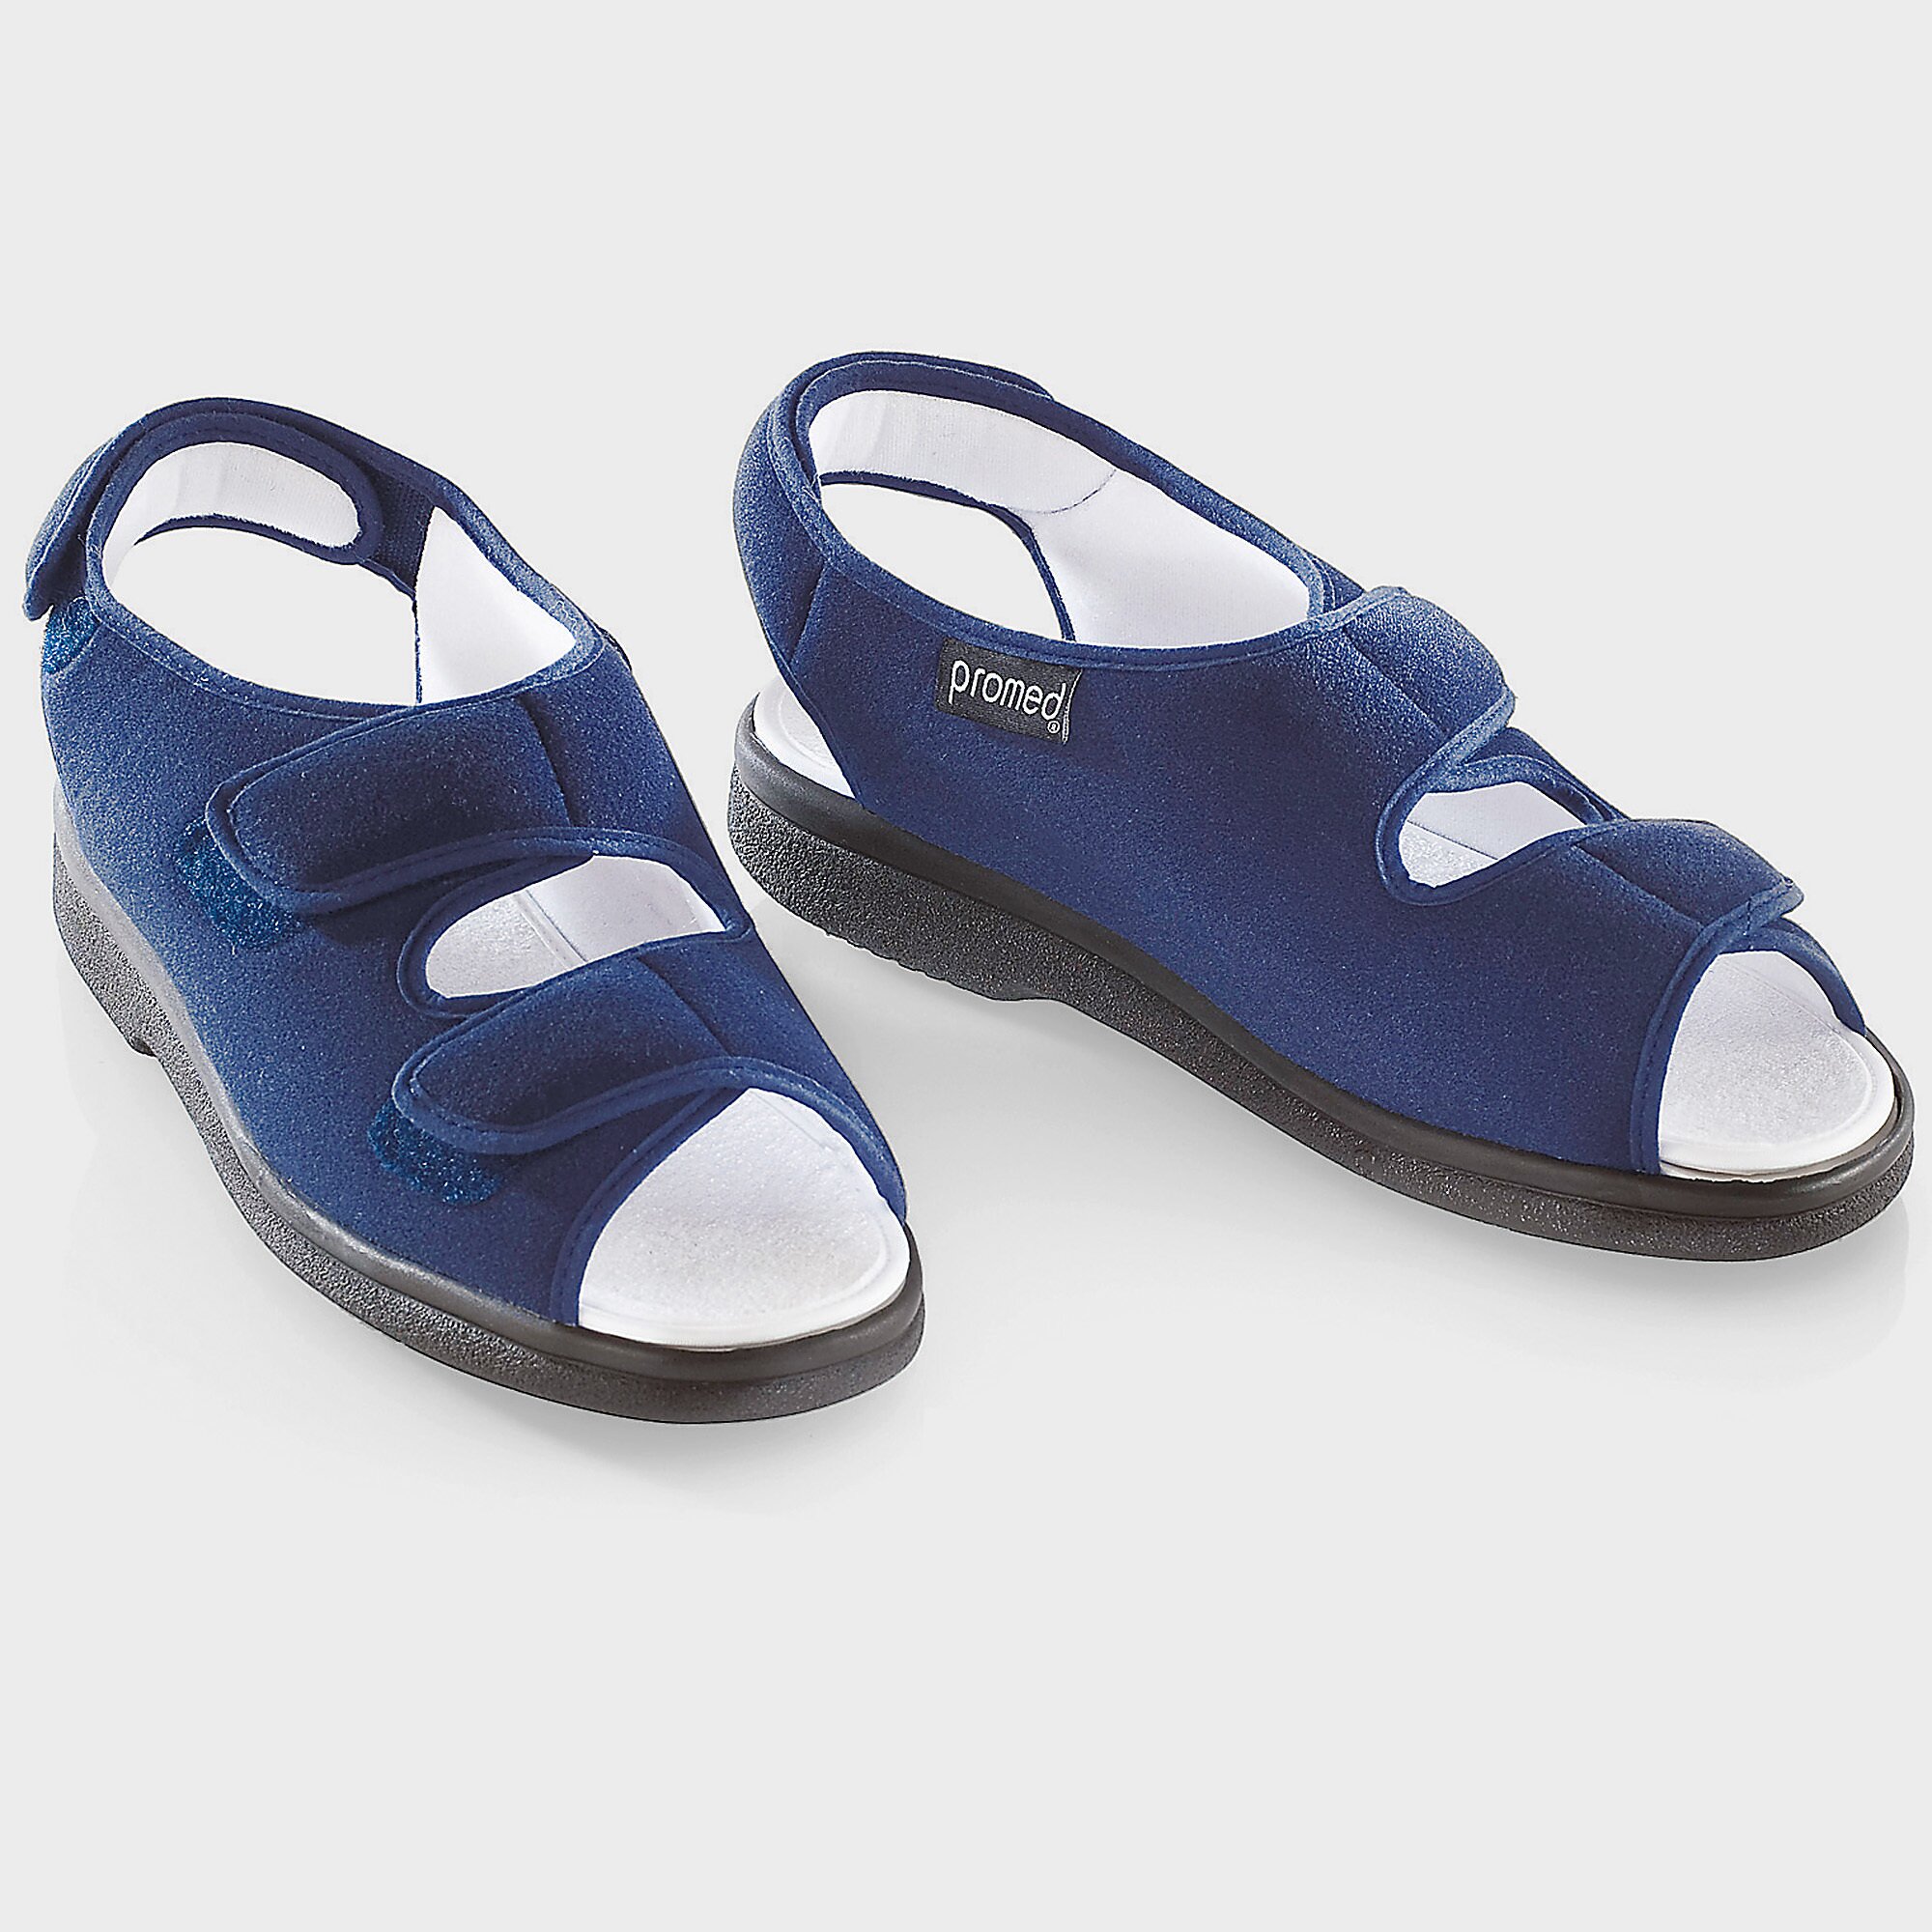 Promed Klettverschluss-Sandale, Größe: 41, blau